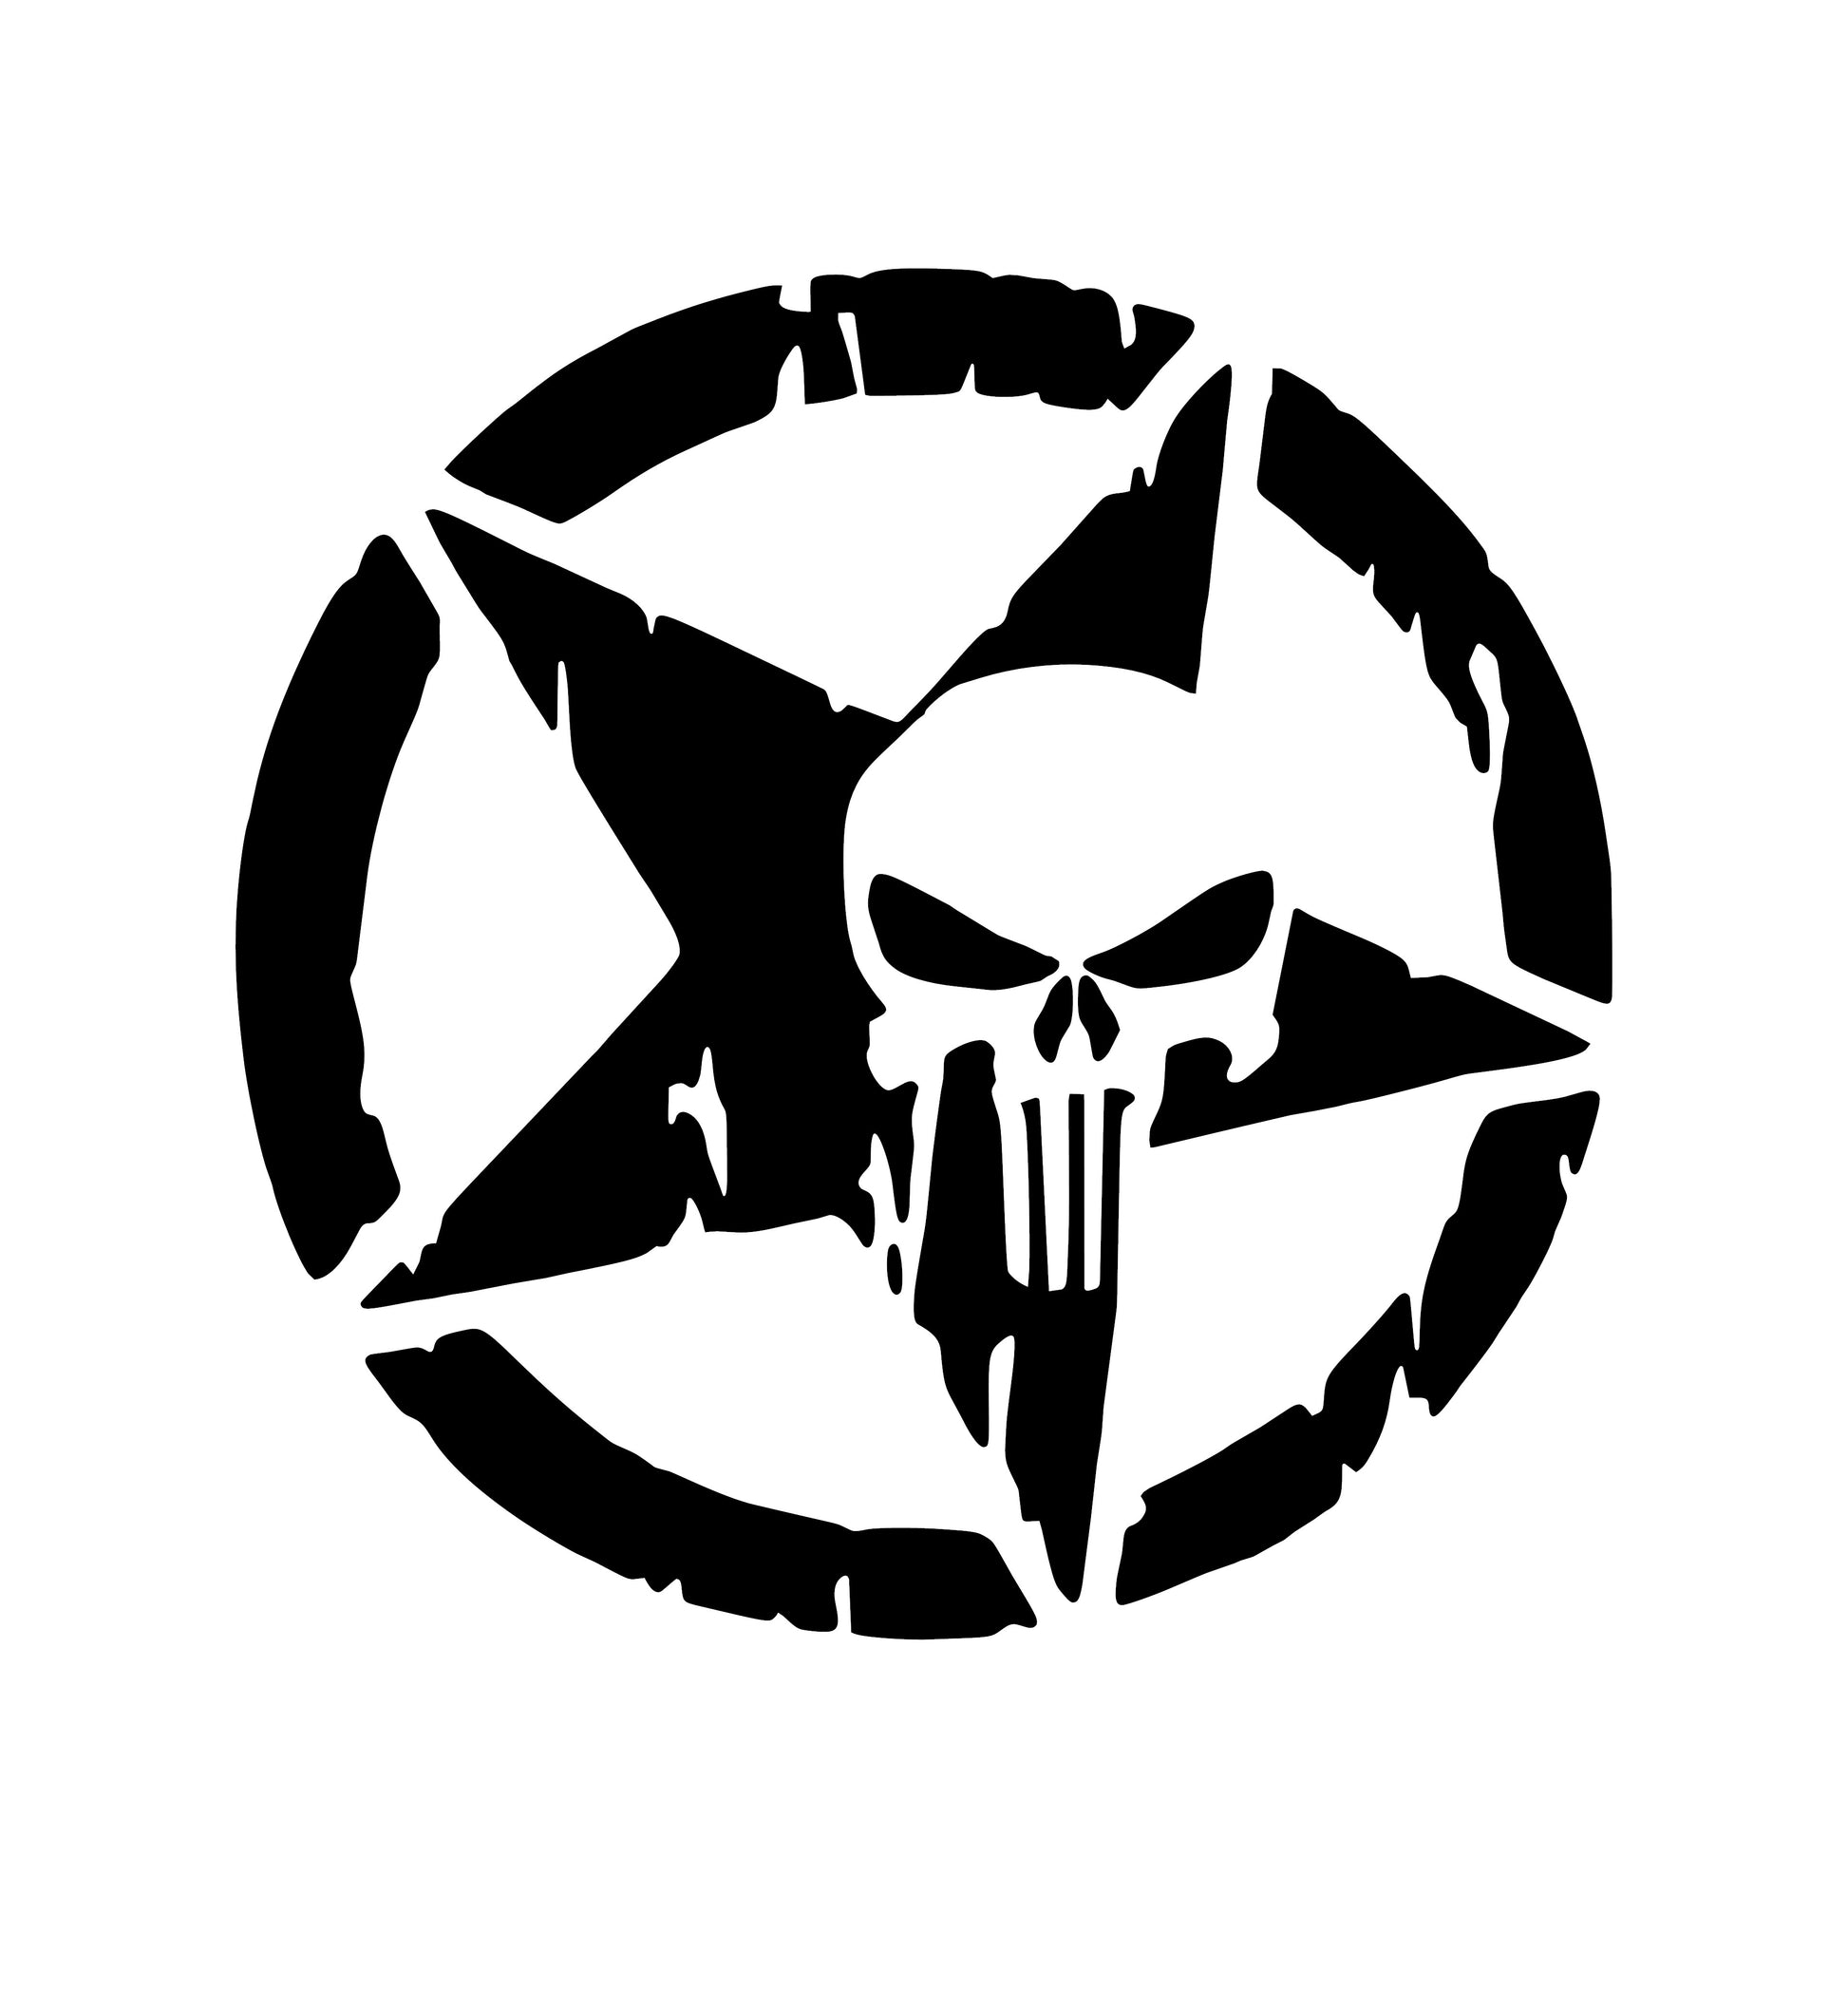 Military Star Punisher Skull Decals Stickers Patriotic Vinyl Decals